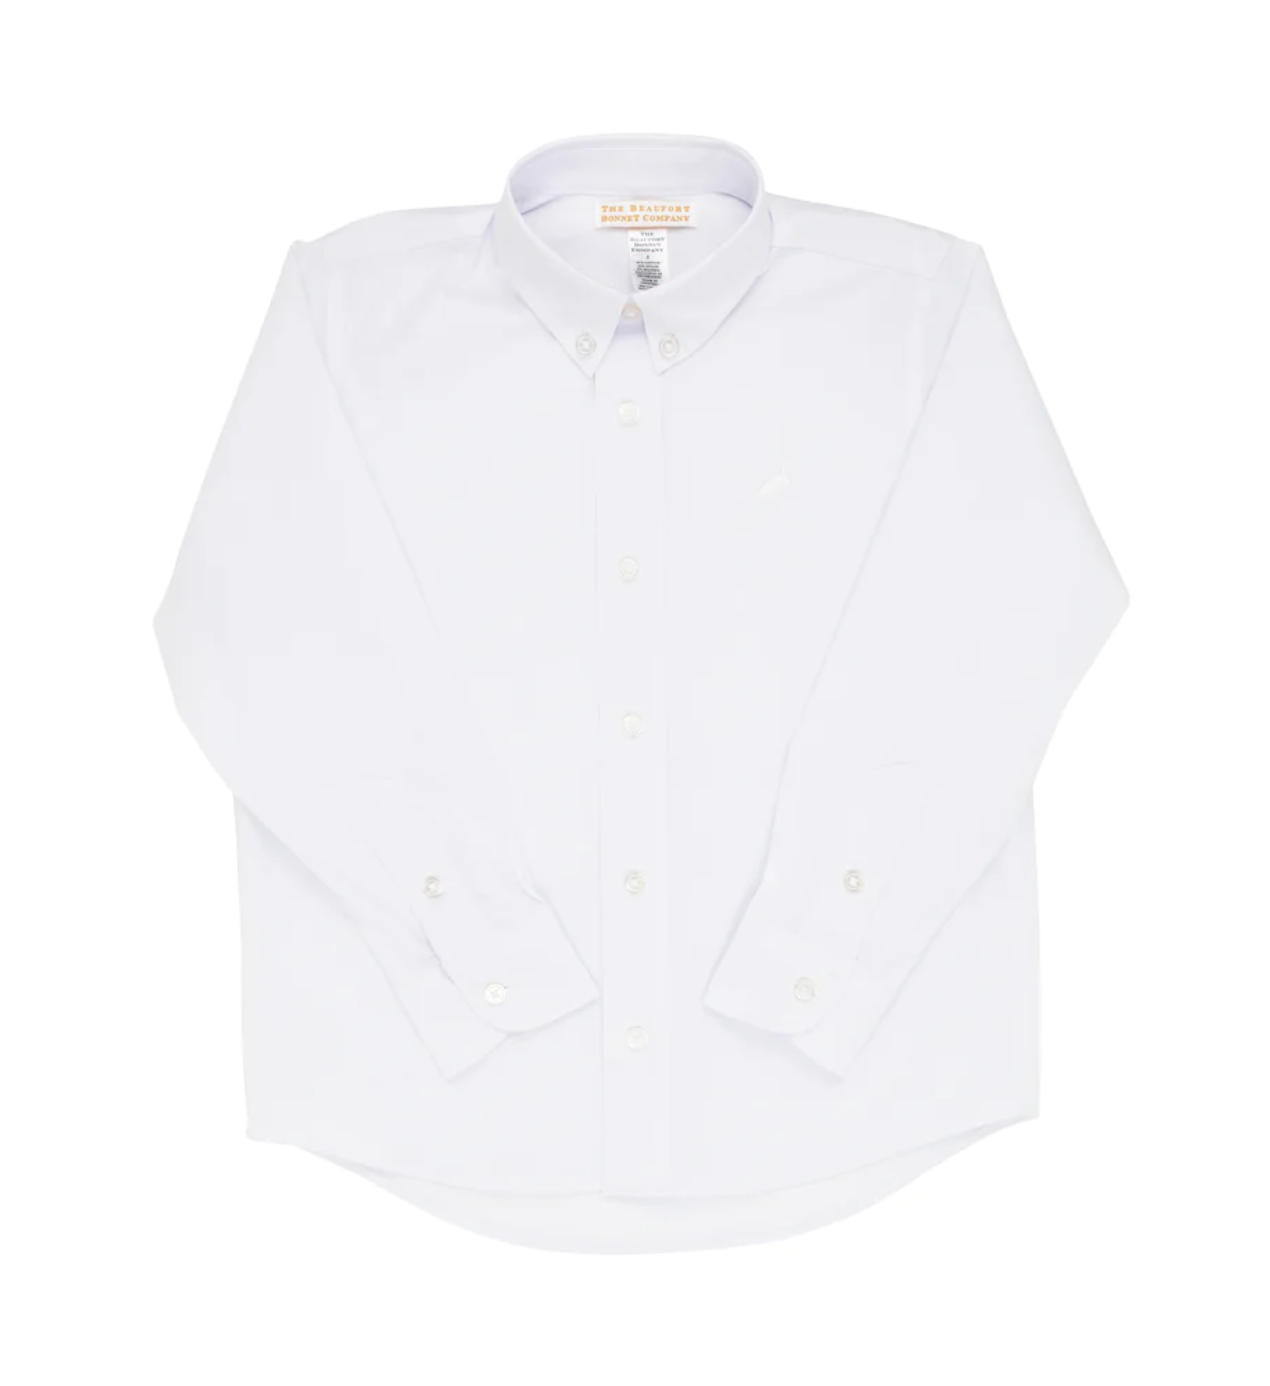 Dean's List Dress Shirt (Oxford) Worth Avenue White With Worth Avenue White Stork